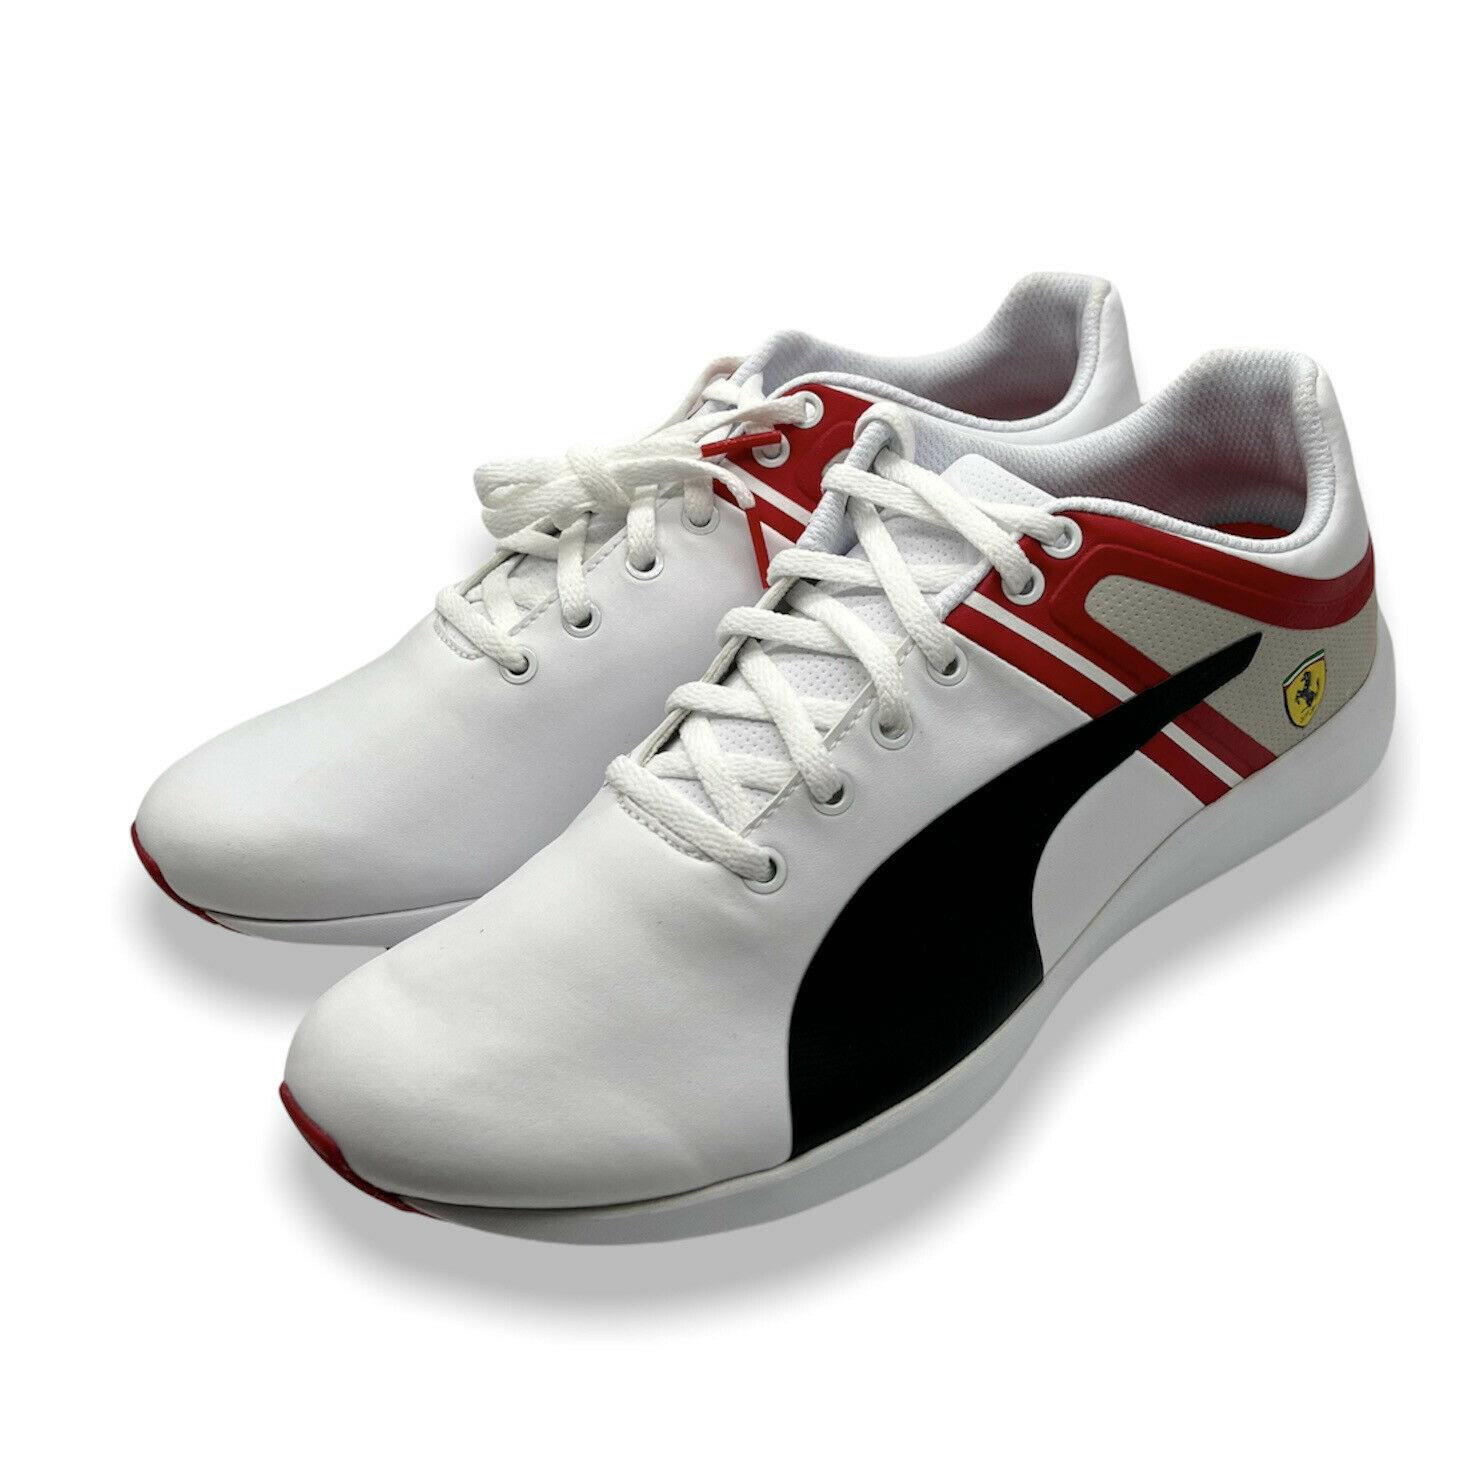 Puma Mens White Black 305825 02 F116 Skin SF Athletic Sneaker Shoes Size 9 US